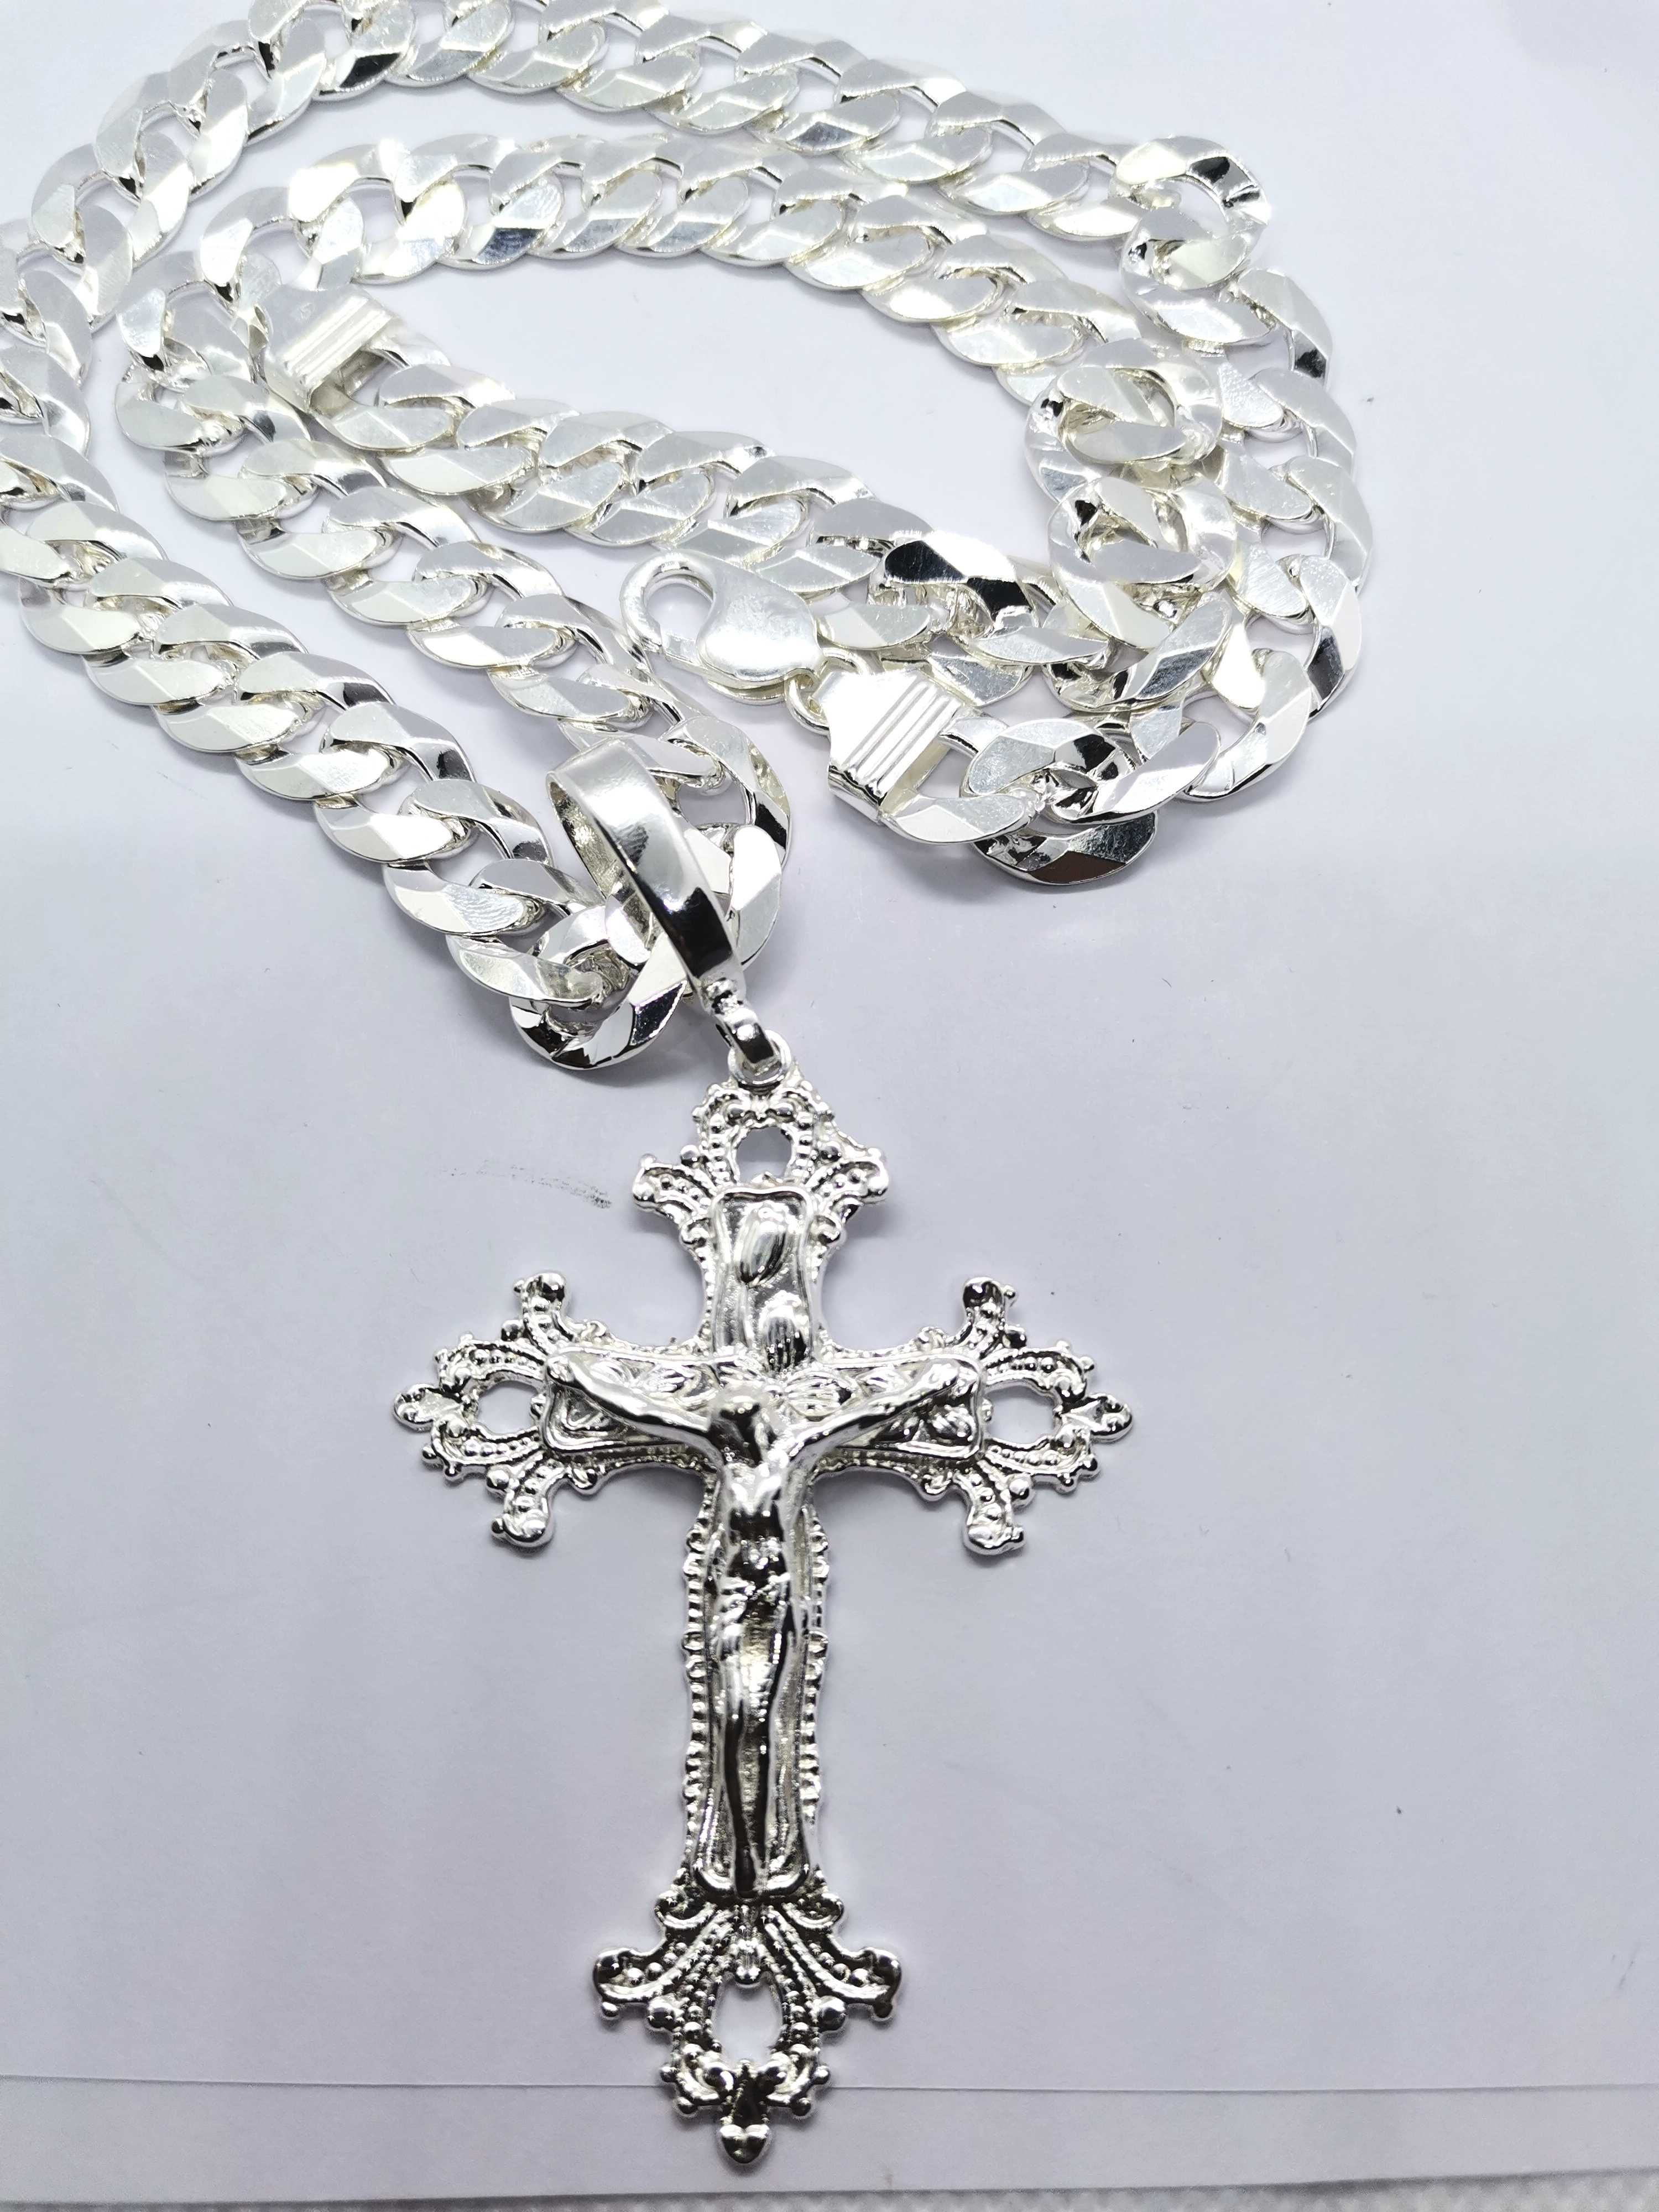 Pancerka duży łańcuch bransoleta i duży krzyż piękny komplet